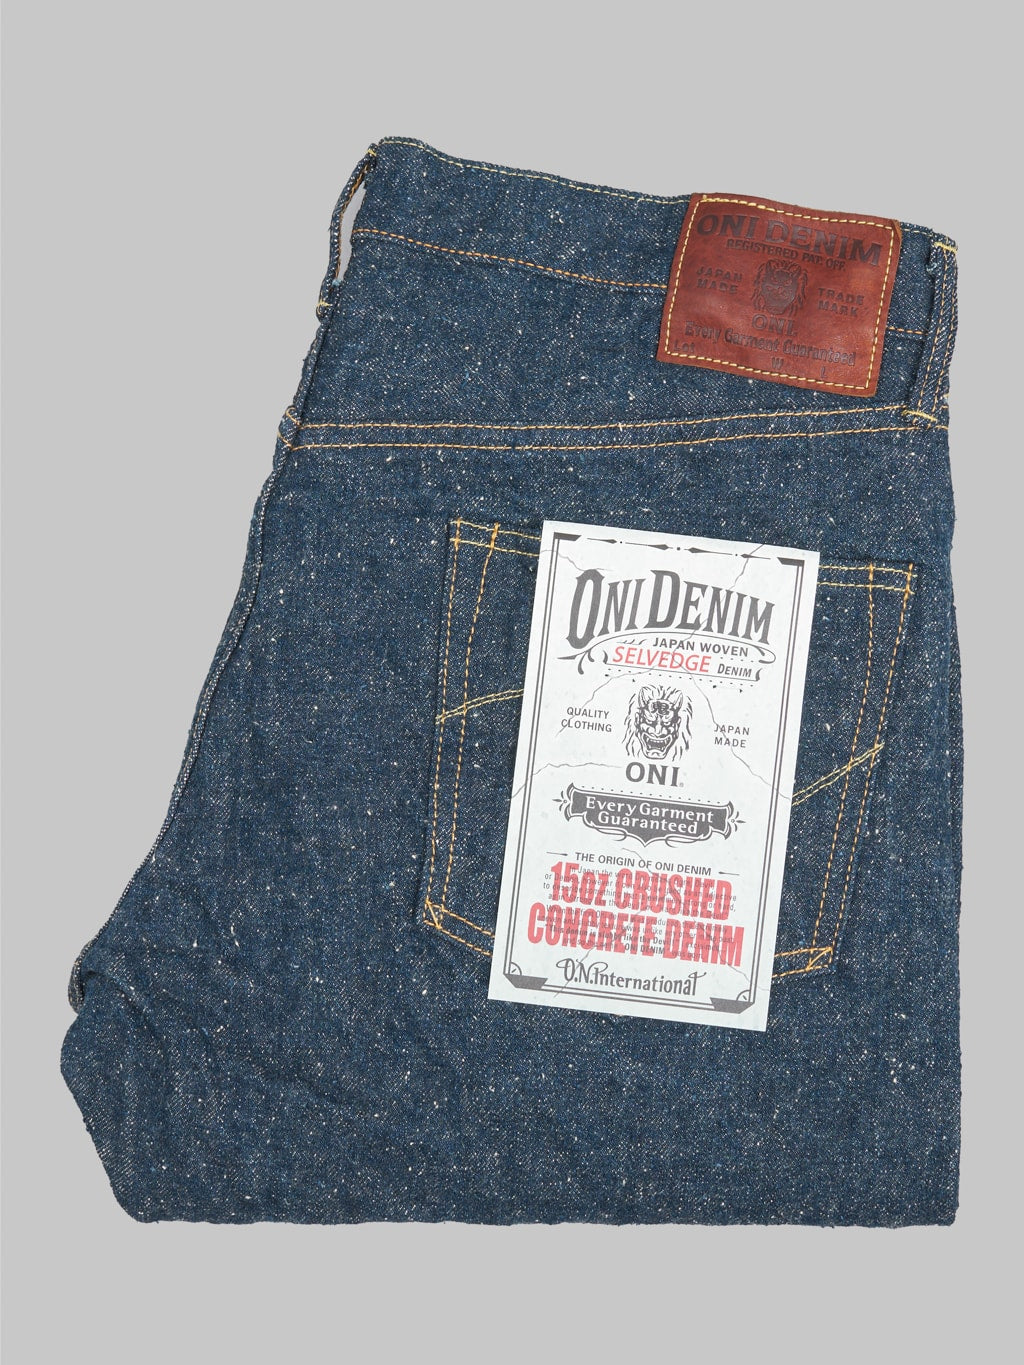 ONI Denim 288-CCD "Crushed Concrete Denim" 14.7oz Regular Straight Jeans